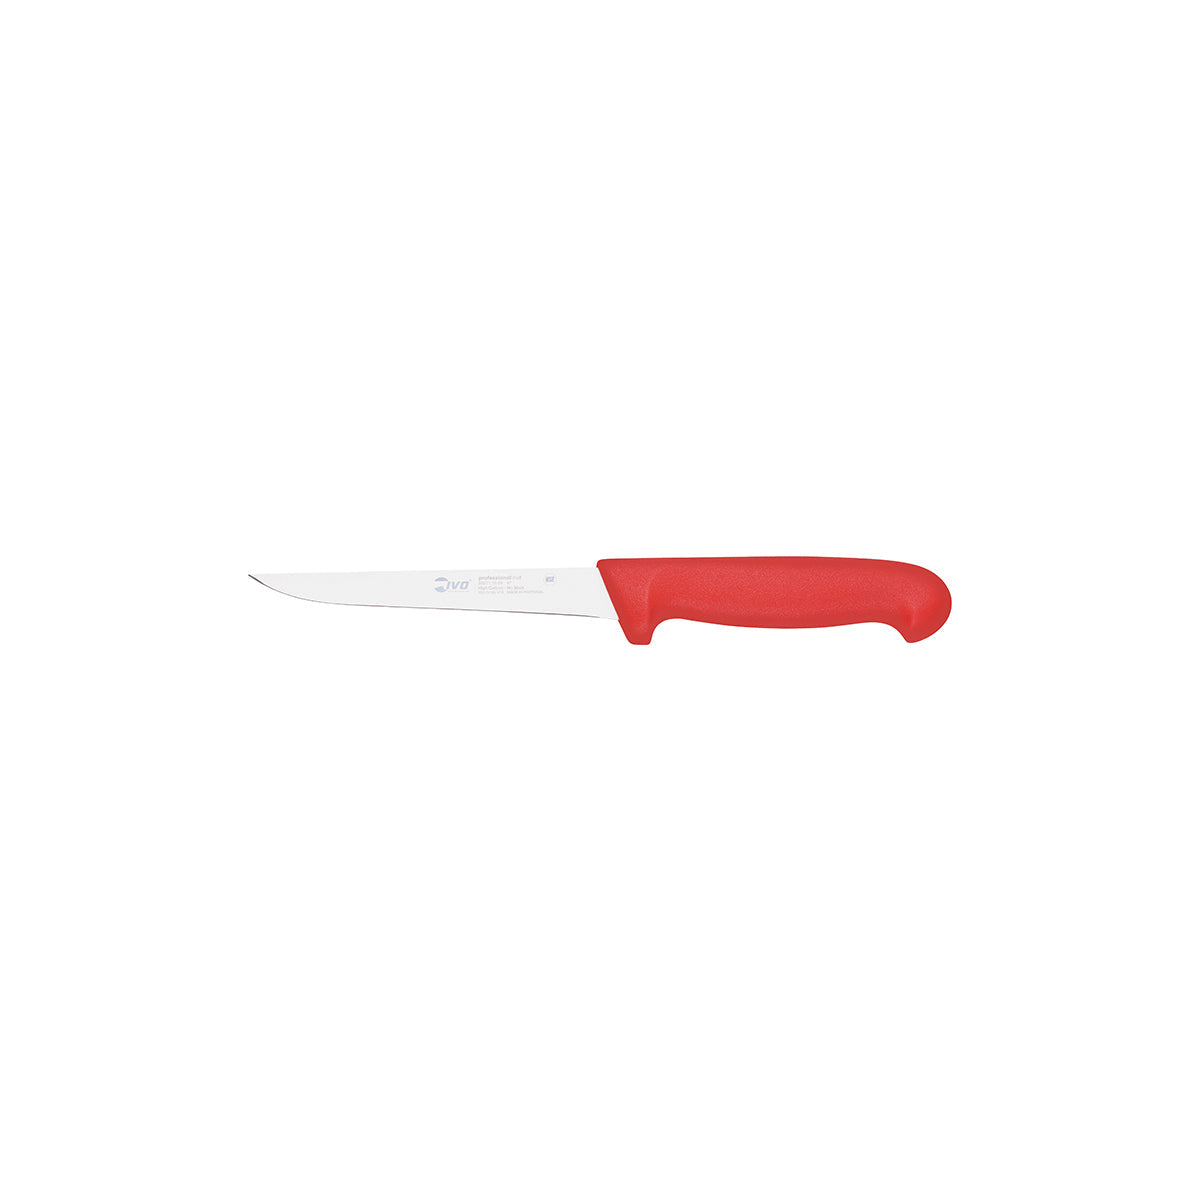 25466 Ivo Professional Line I Boning Knife Red 150mm Tomkin Australia Hospitality Supplies